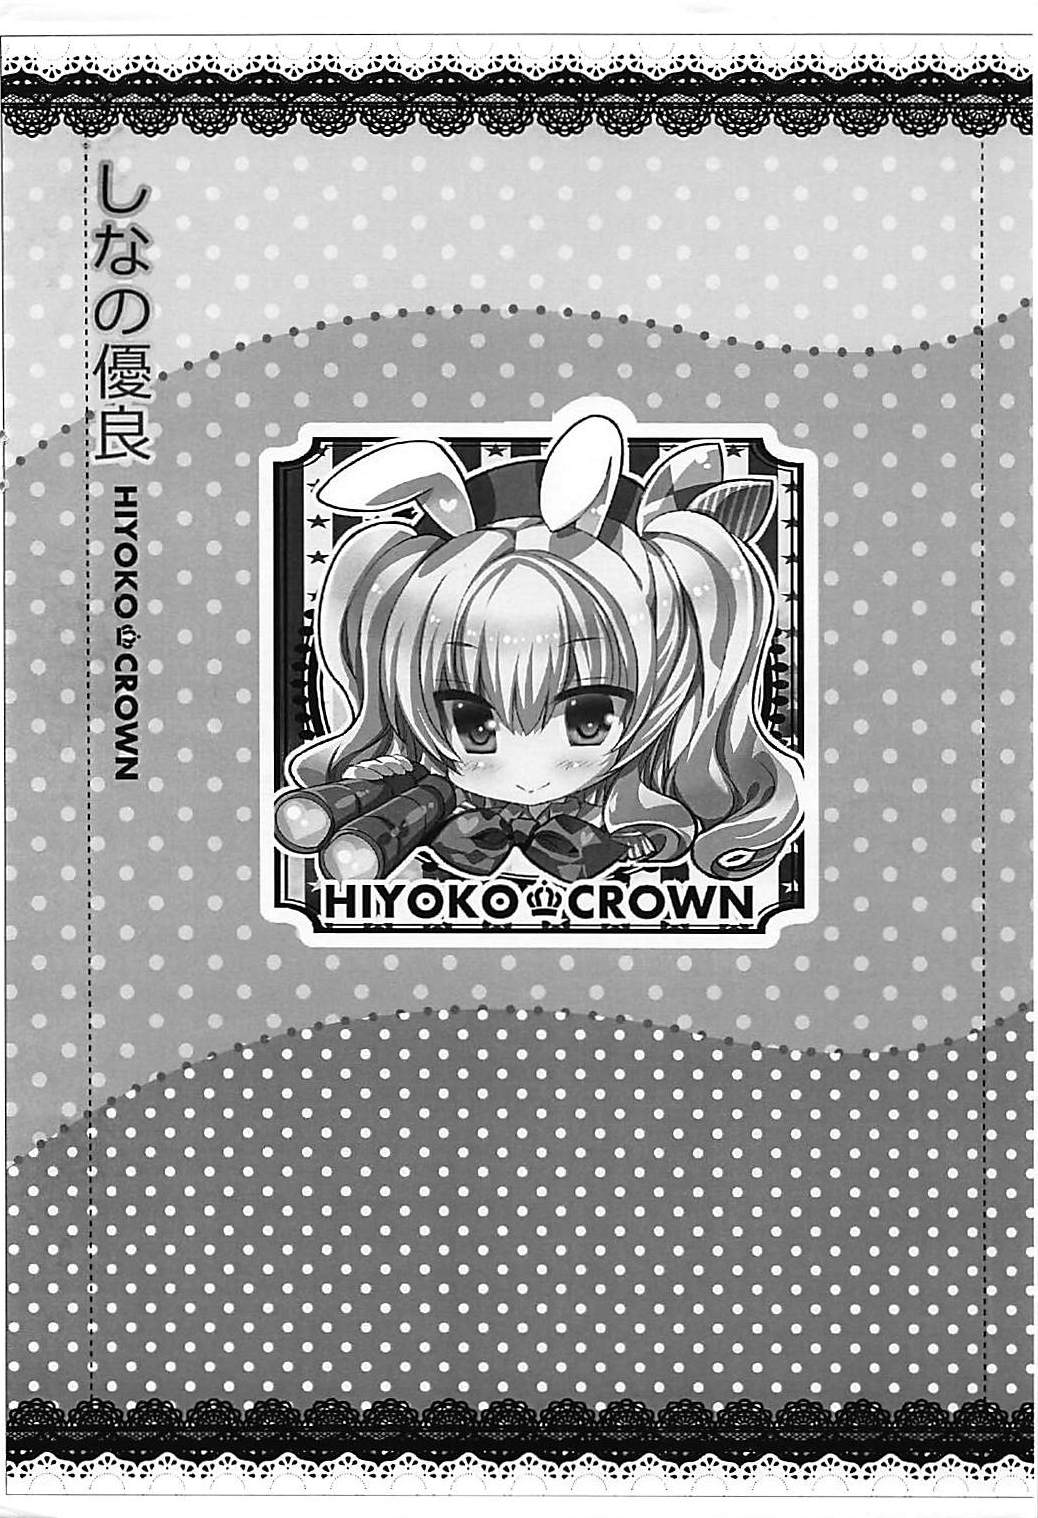 (COMIC1☆10) [HIYOKO CROWN (しなの優良)] HIYOKKO CLUB 1 (艦隊これくしょん -艦これ-)